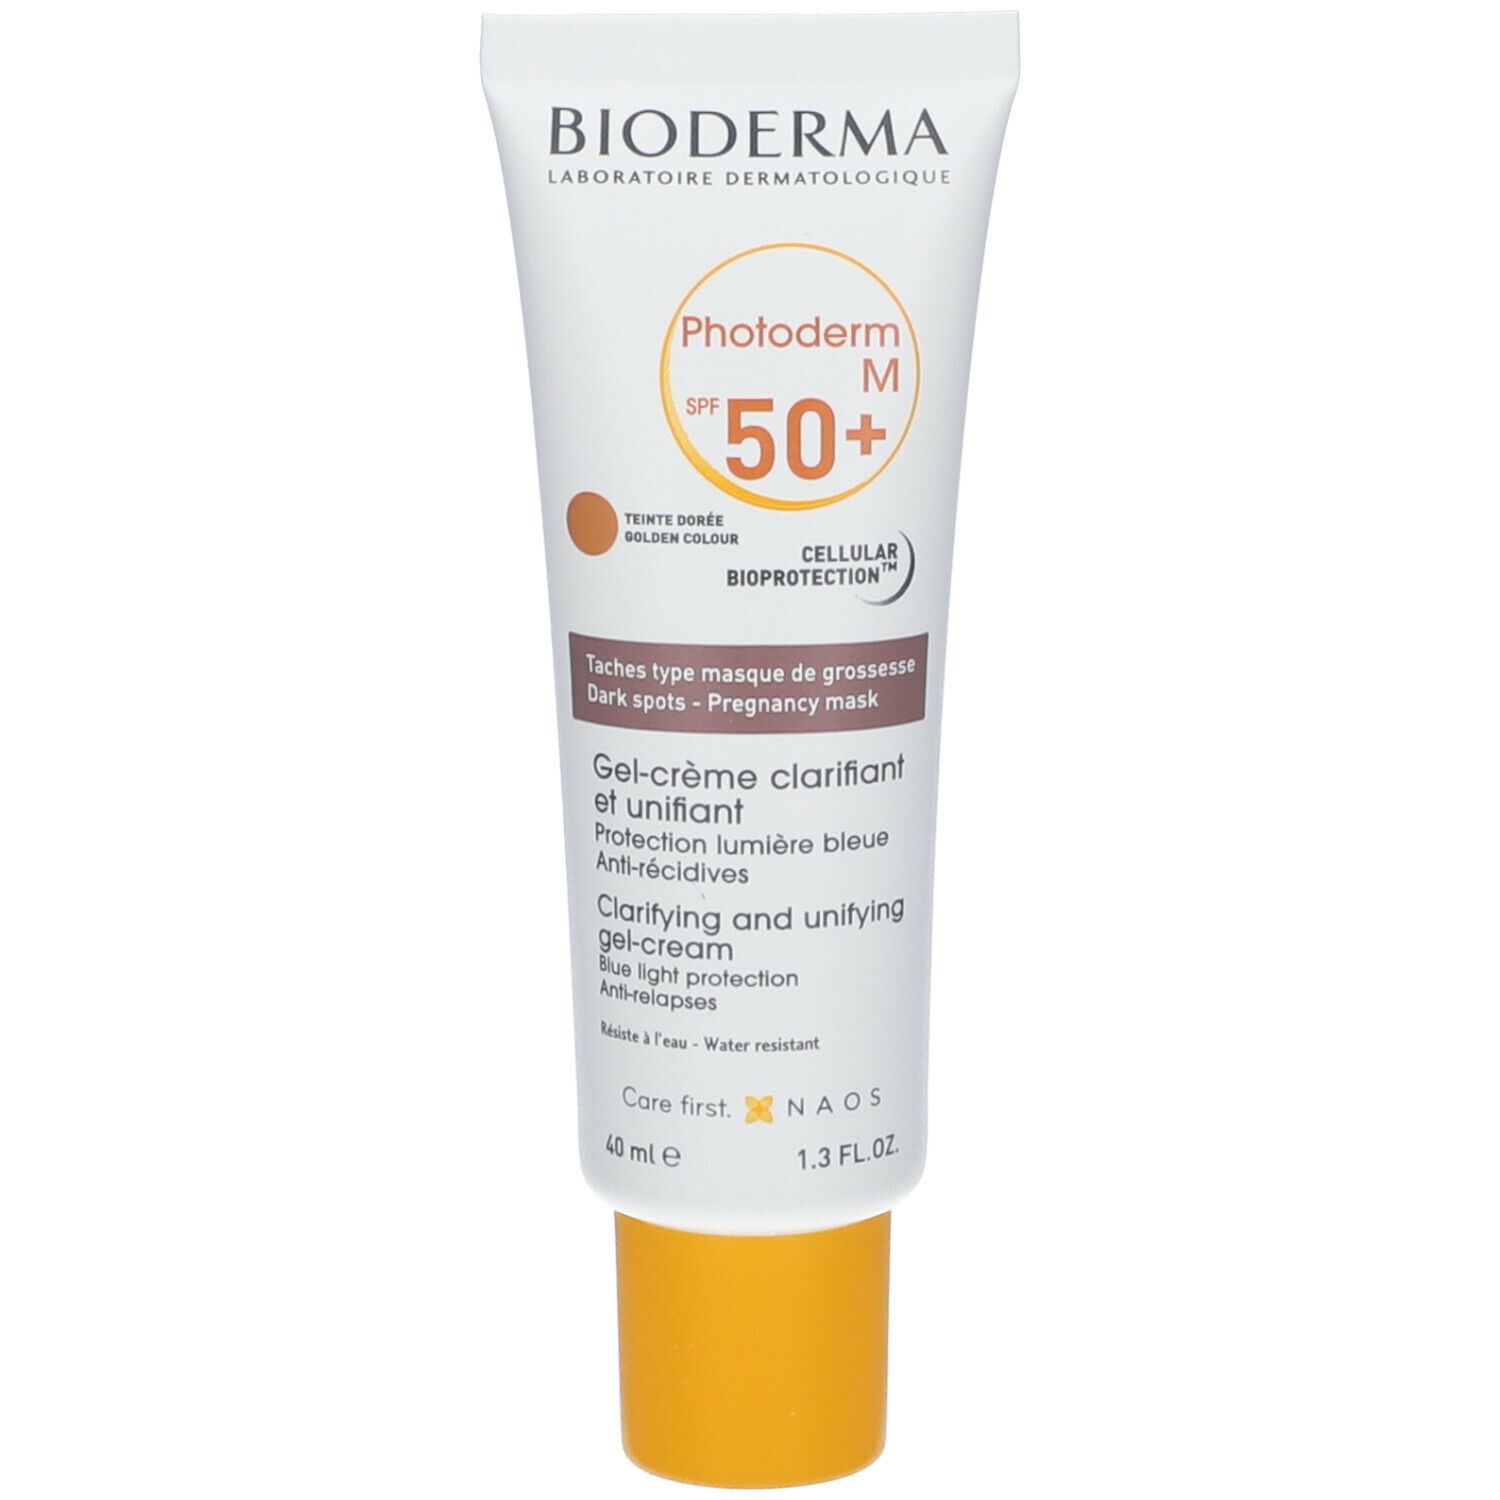 Bioderma Photoderm M Gel-Crème Clarifiant Dorée SPF 50+